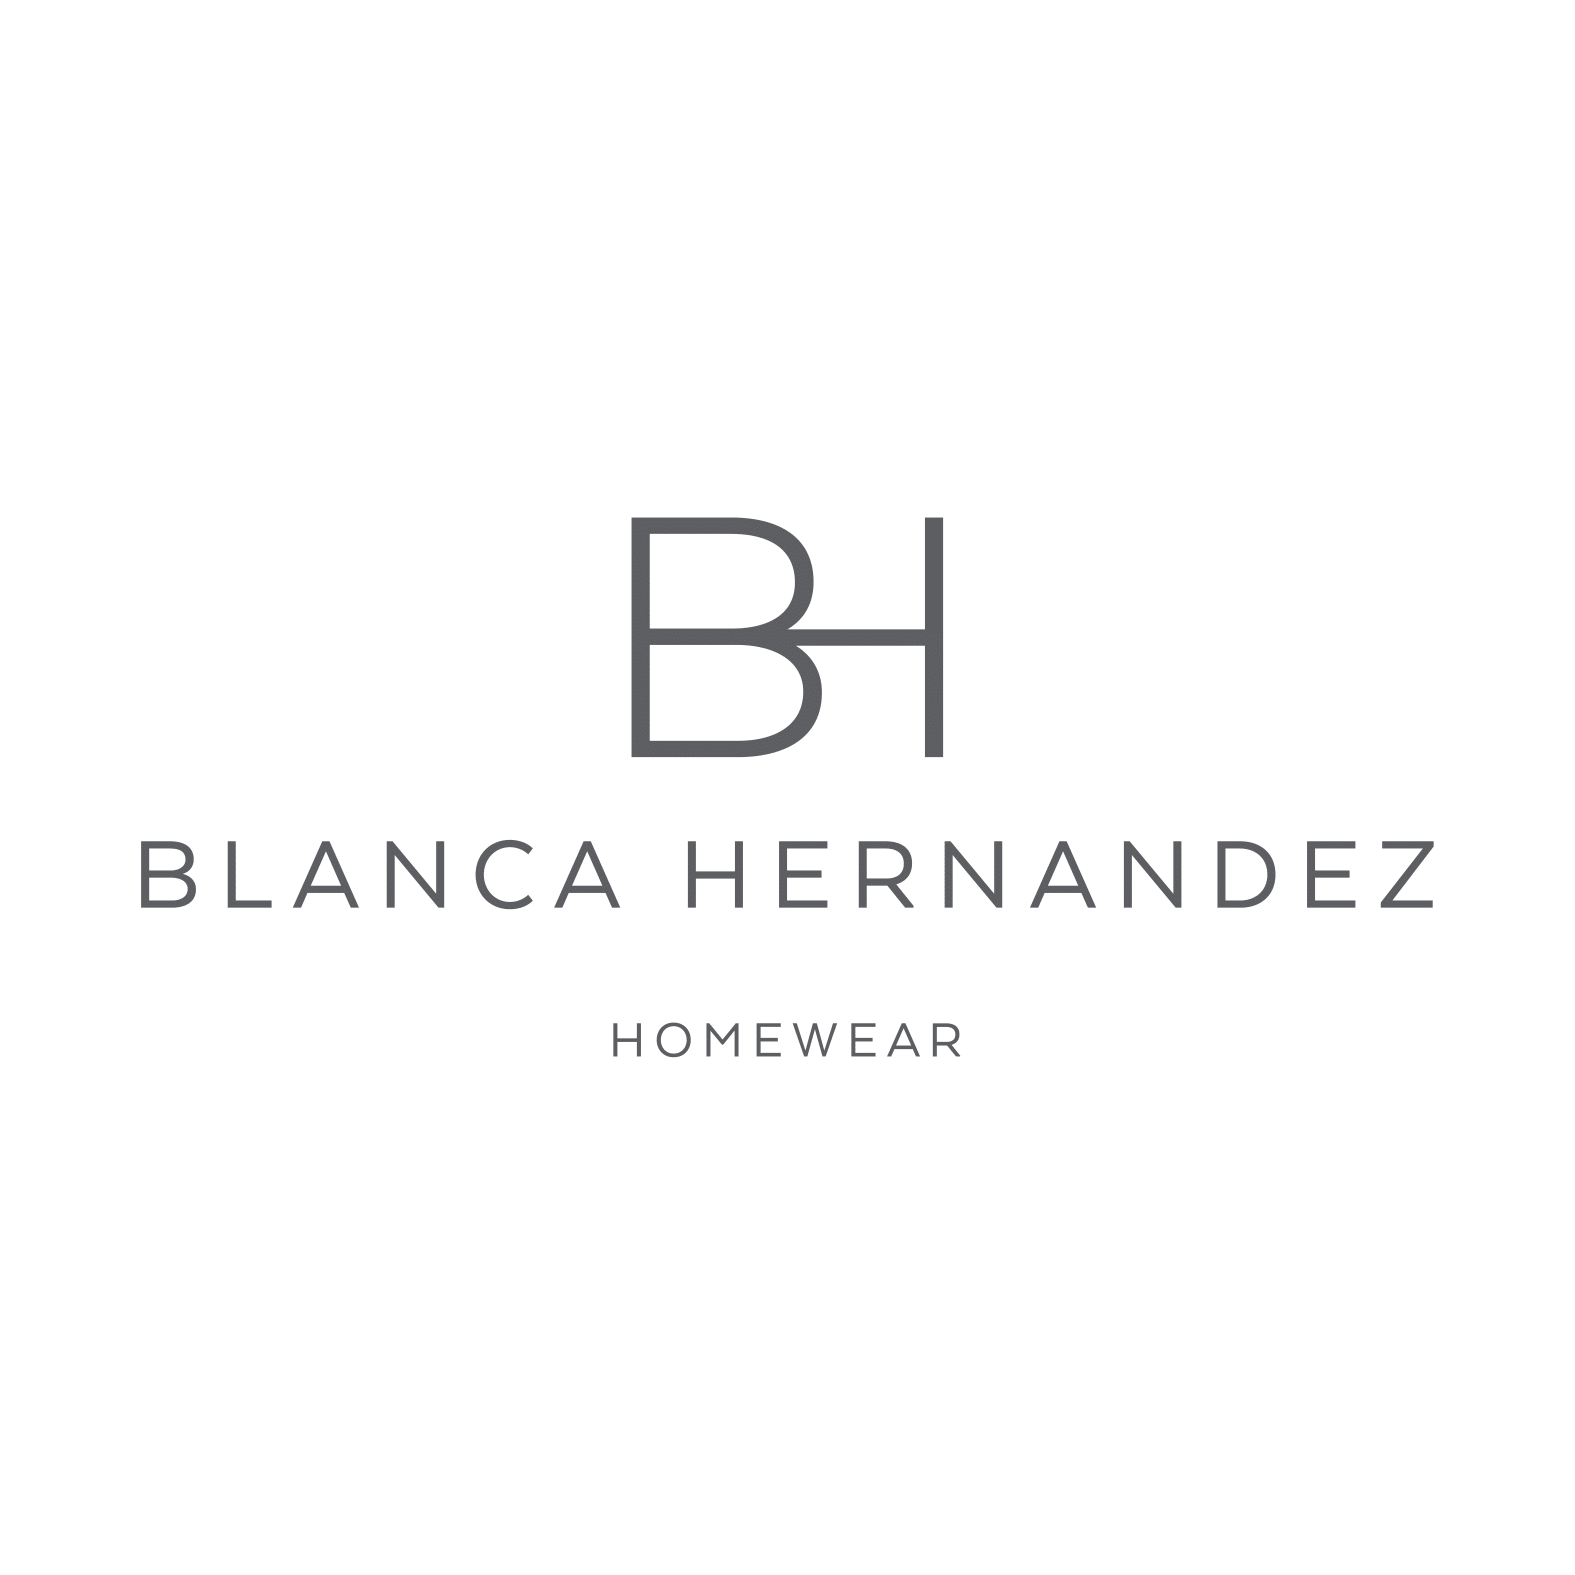 BLANCA HERNANDEZ